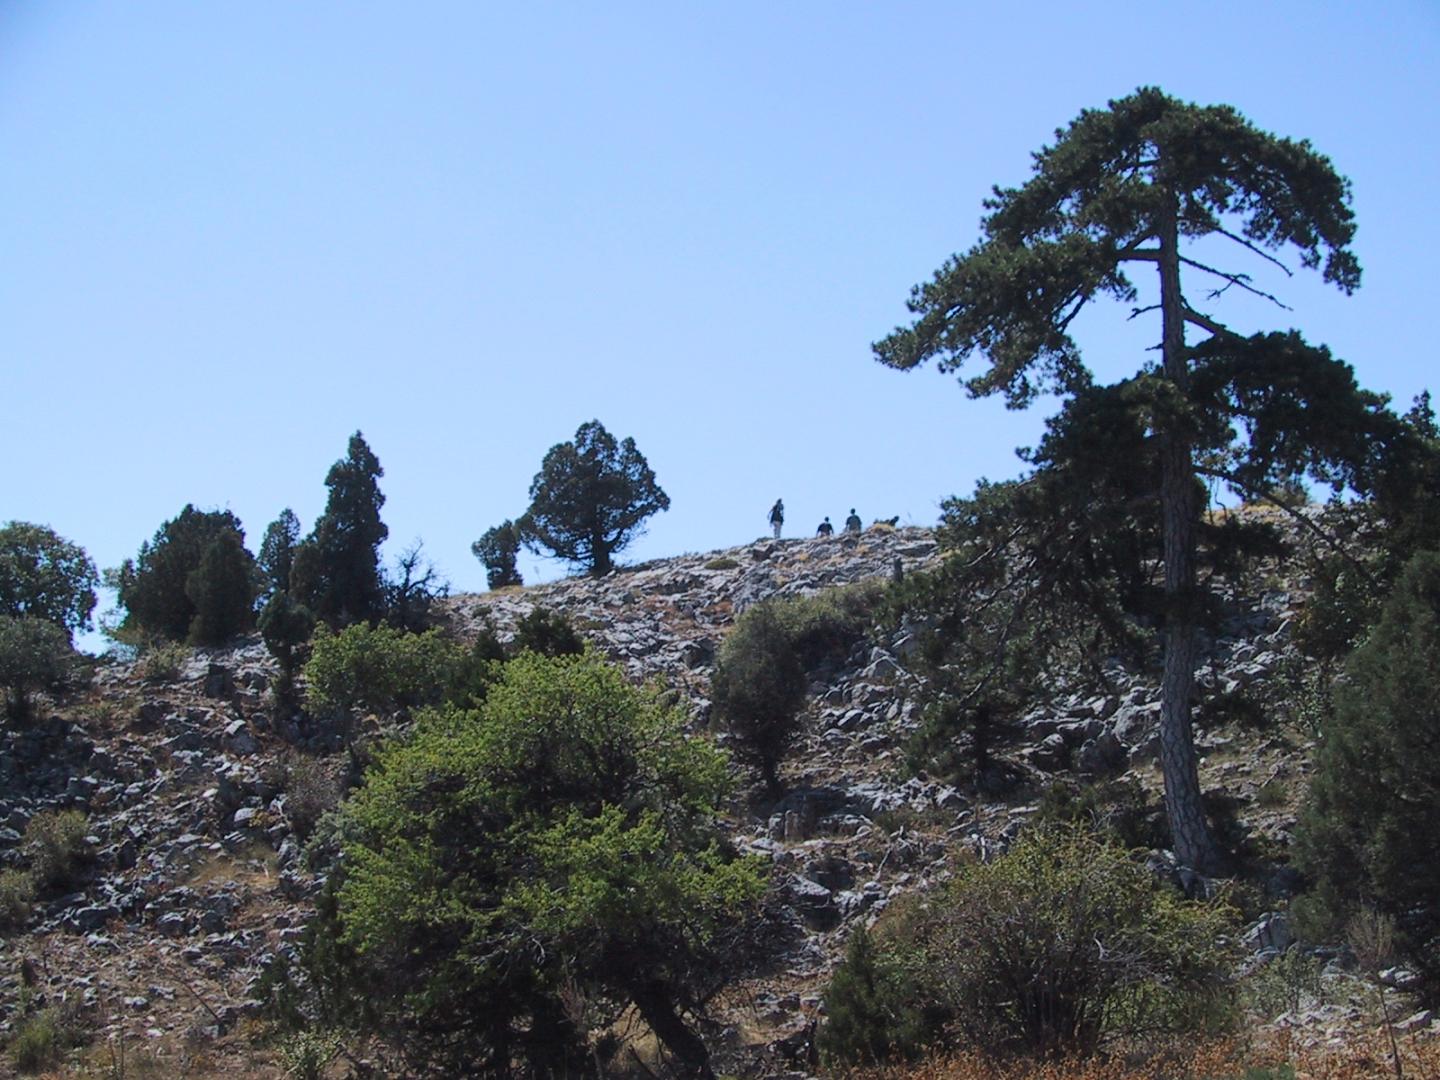 Black Pines in Turkey